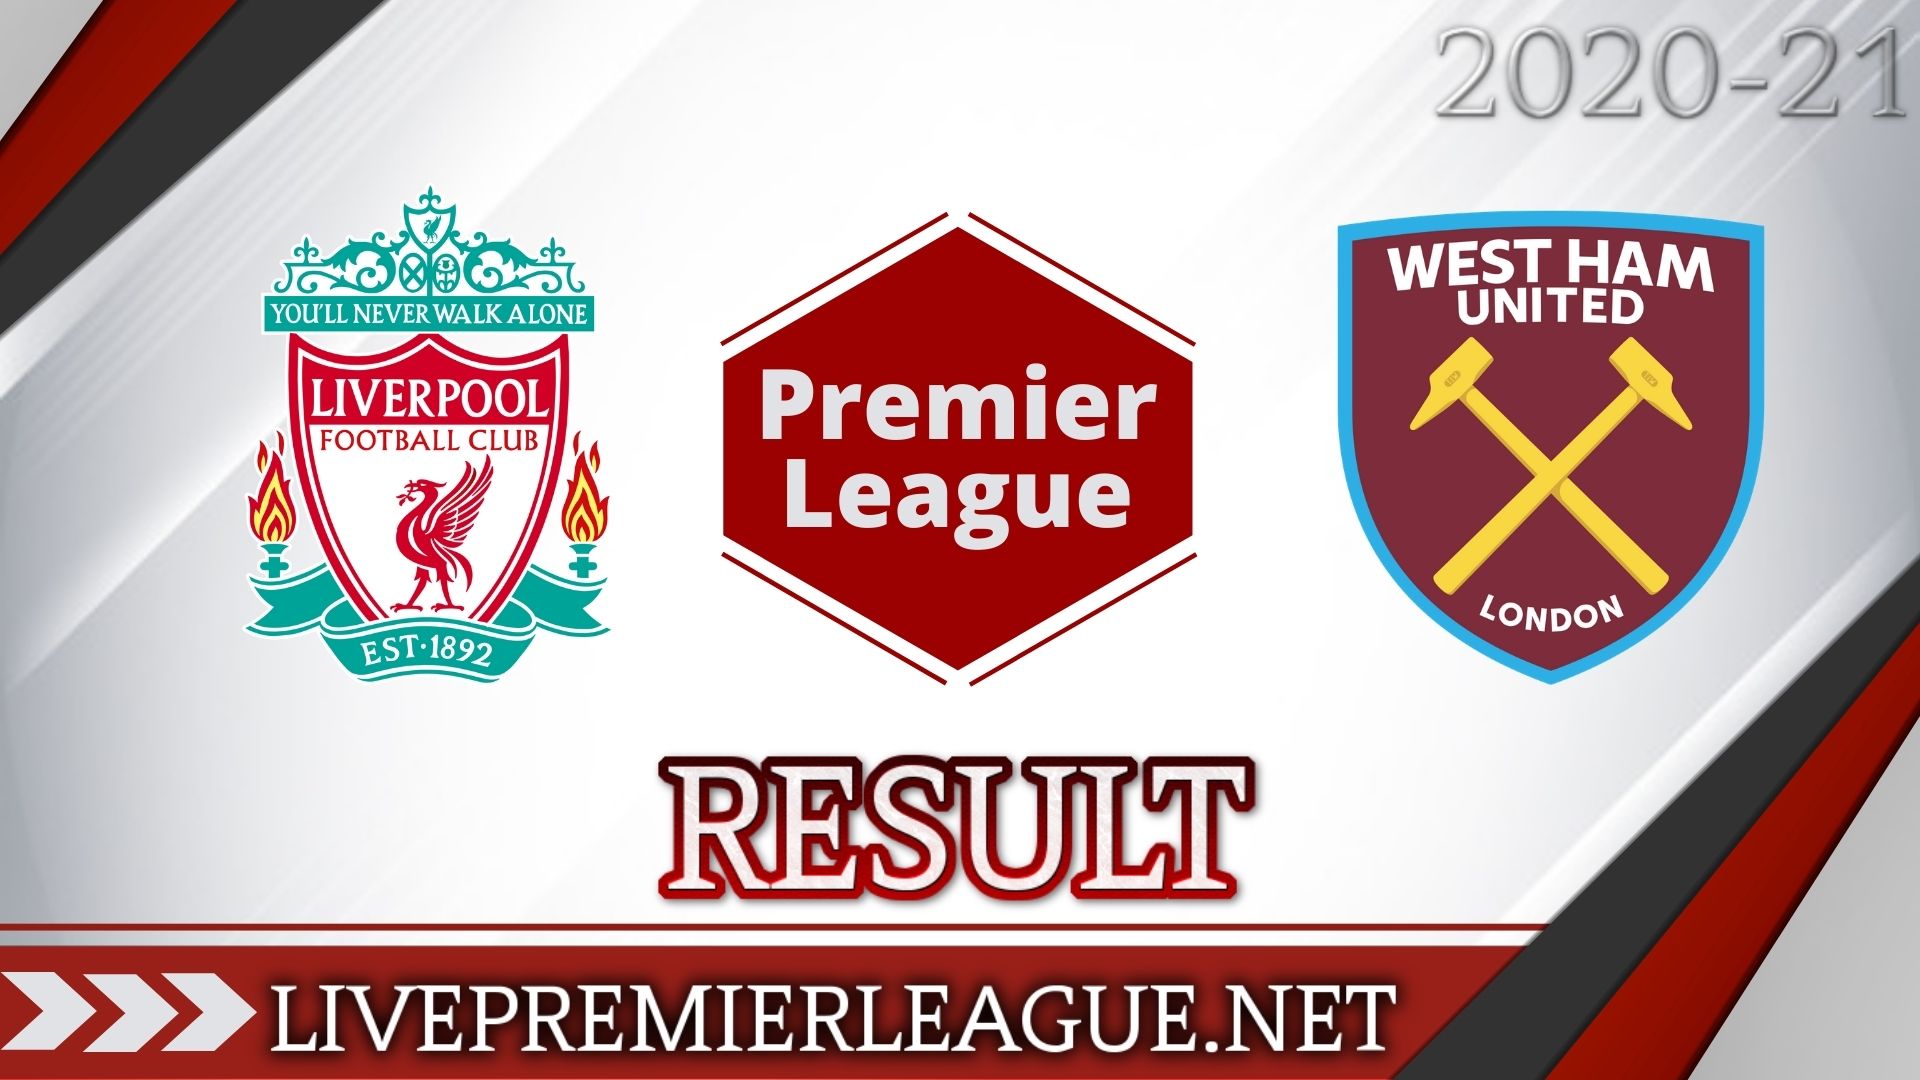 Liverpool Vs West Ham United | Week 7 Result 2020